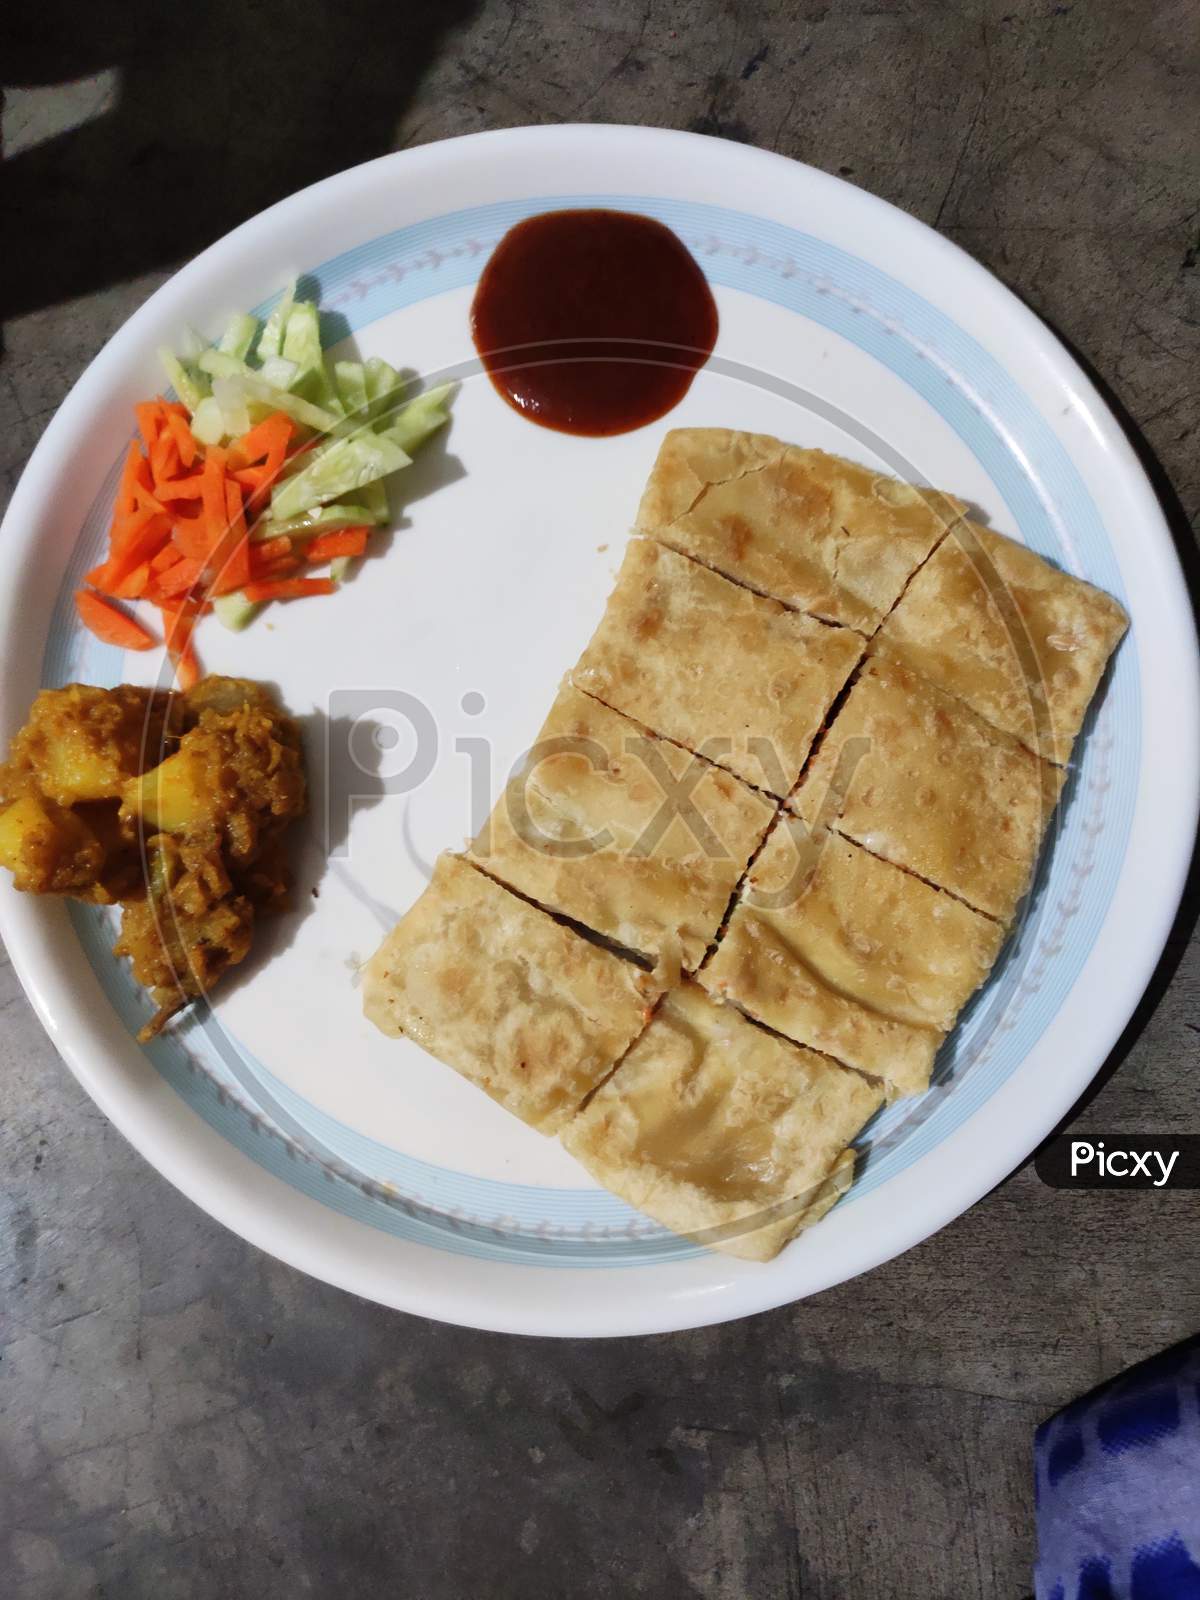 Moglai Parota and sauce in the plate.